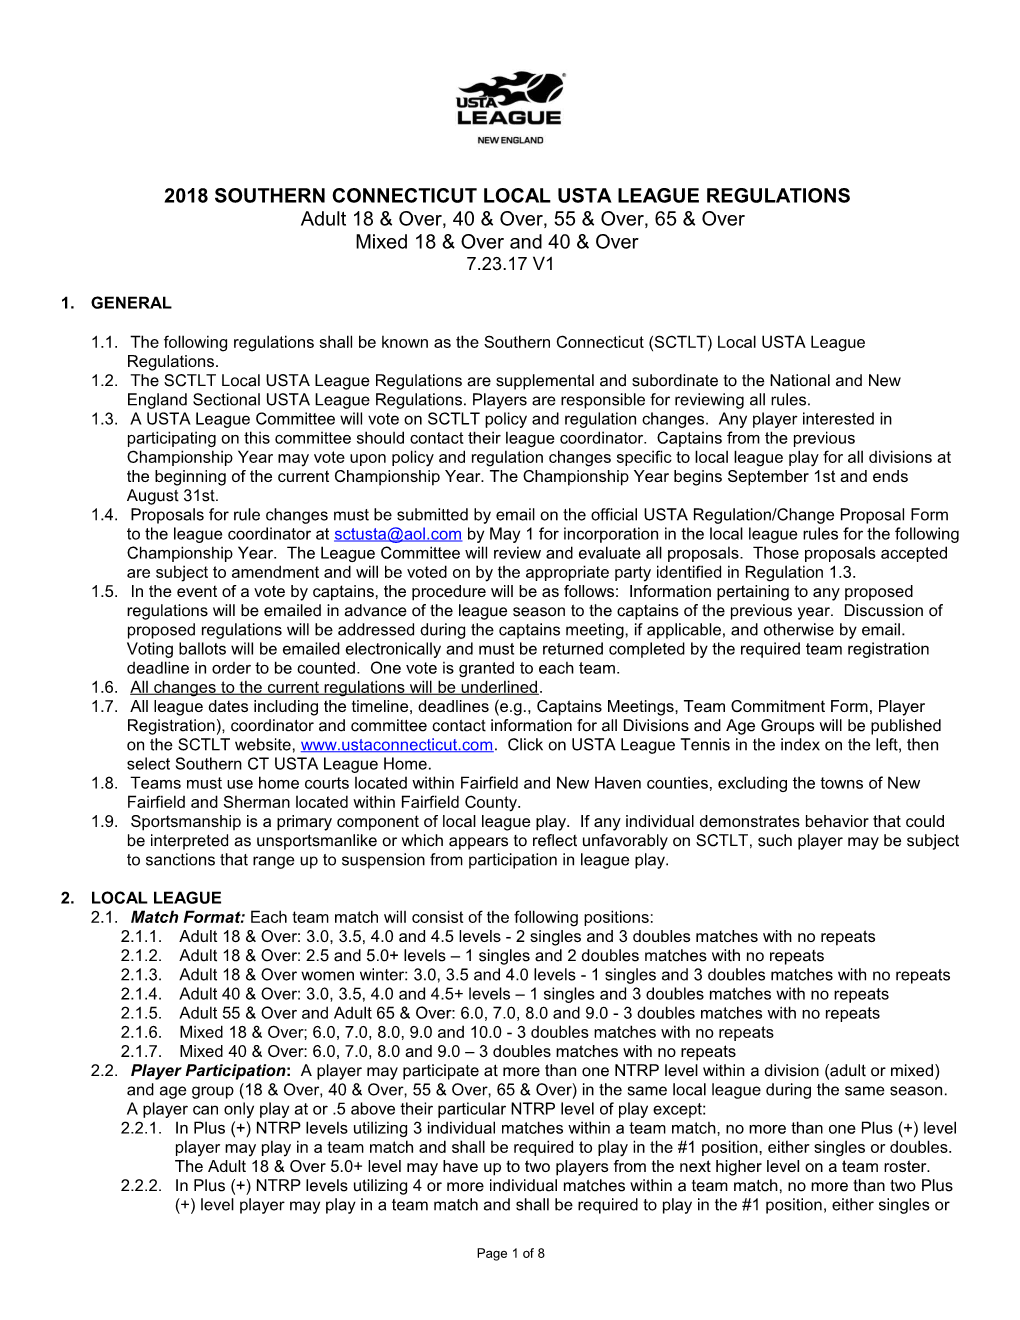 2018Southern Connecticutlocal Usta League Regulations